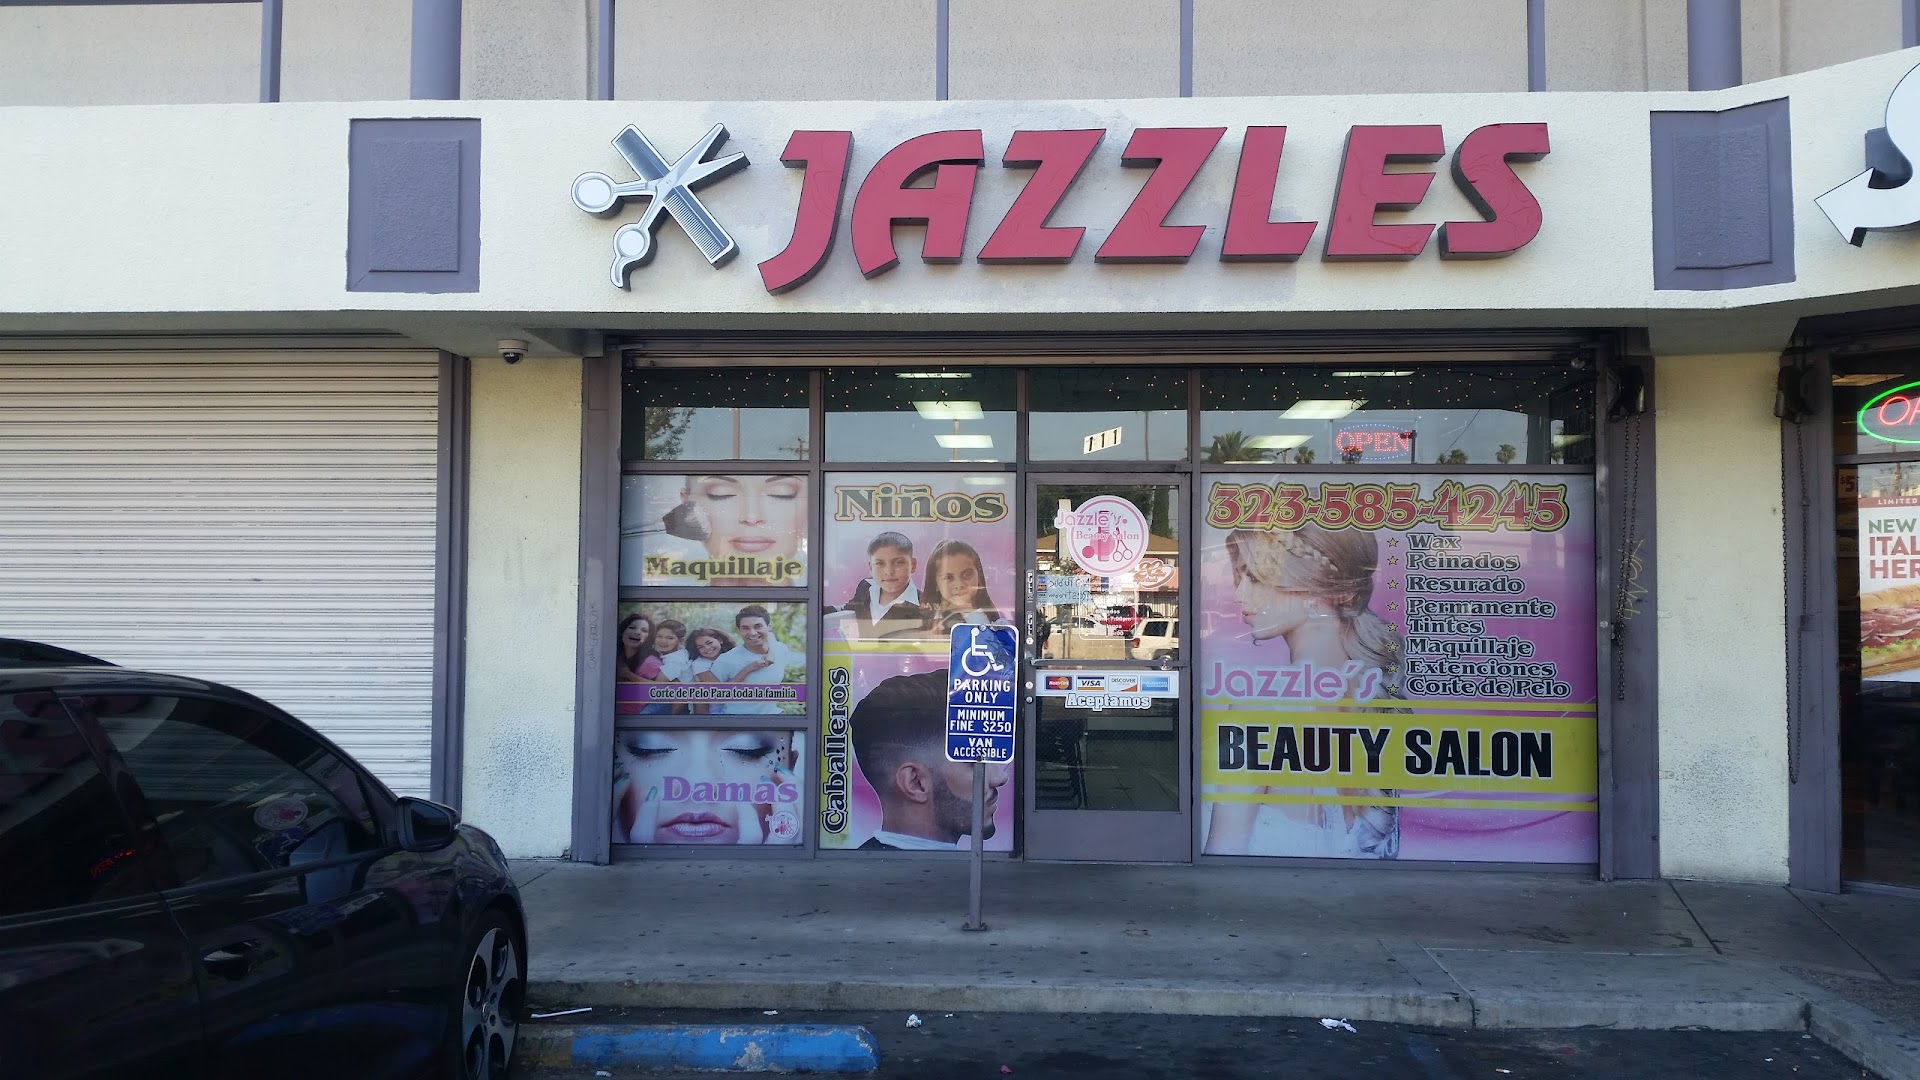 Jazzles Beauty Salon